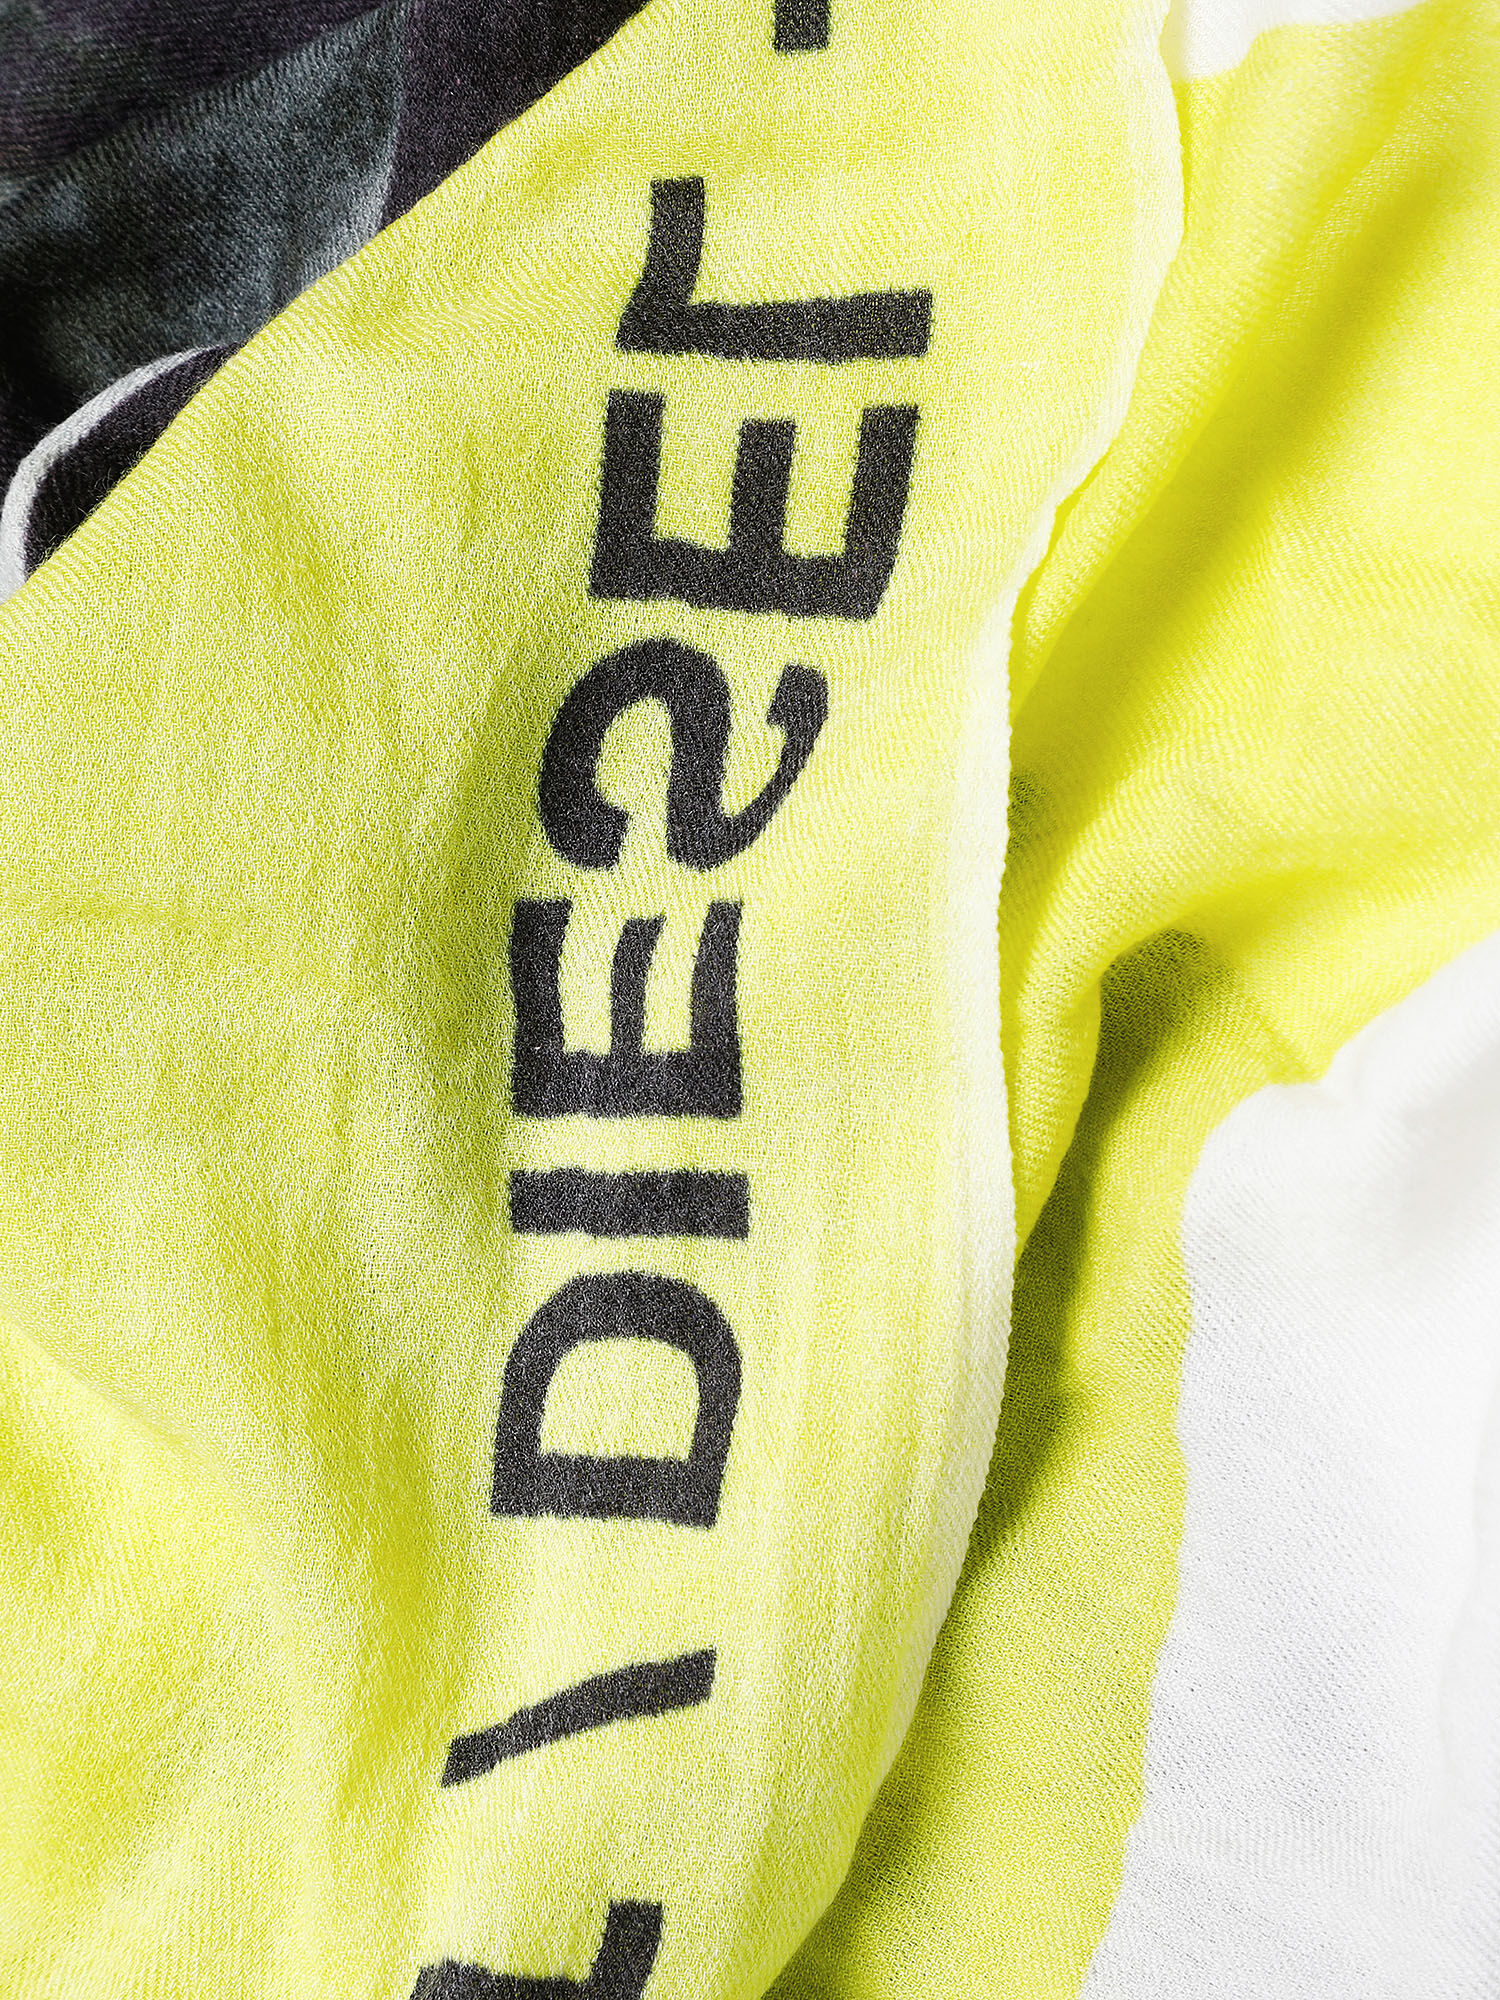 Diesel - SRIGHT,  - Image 3